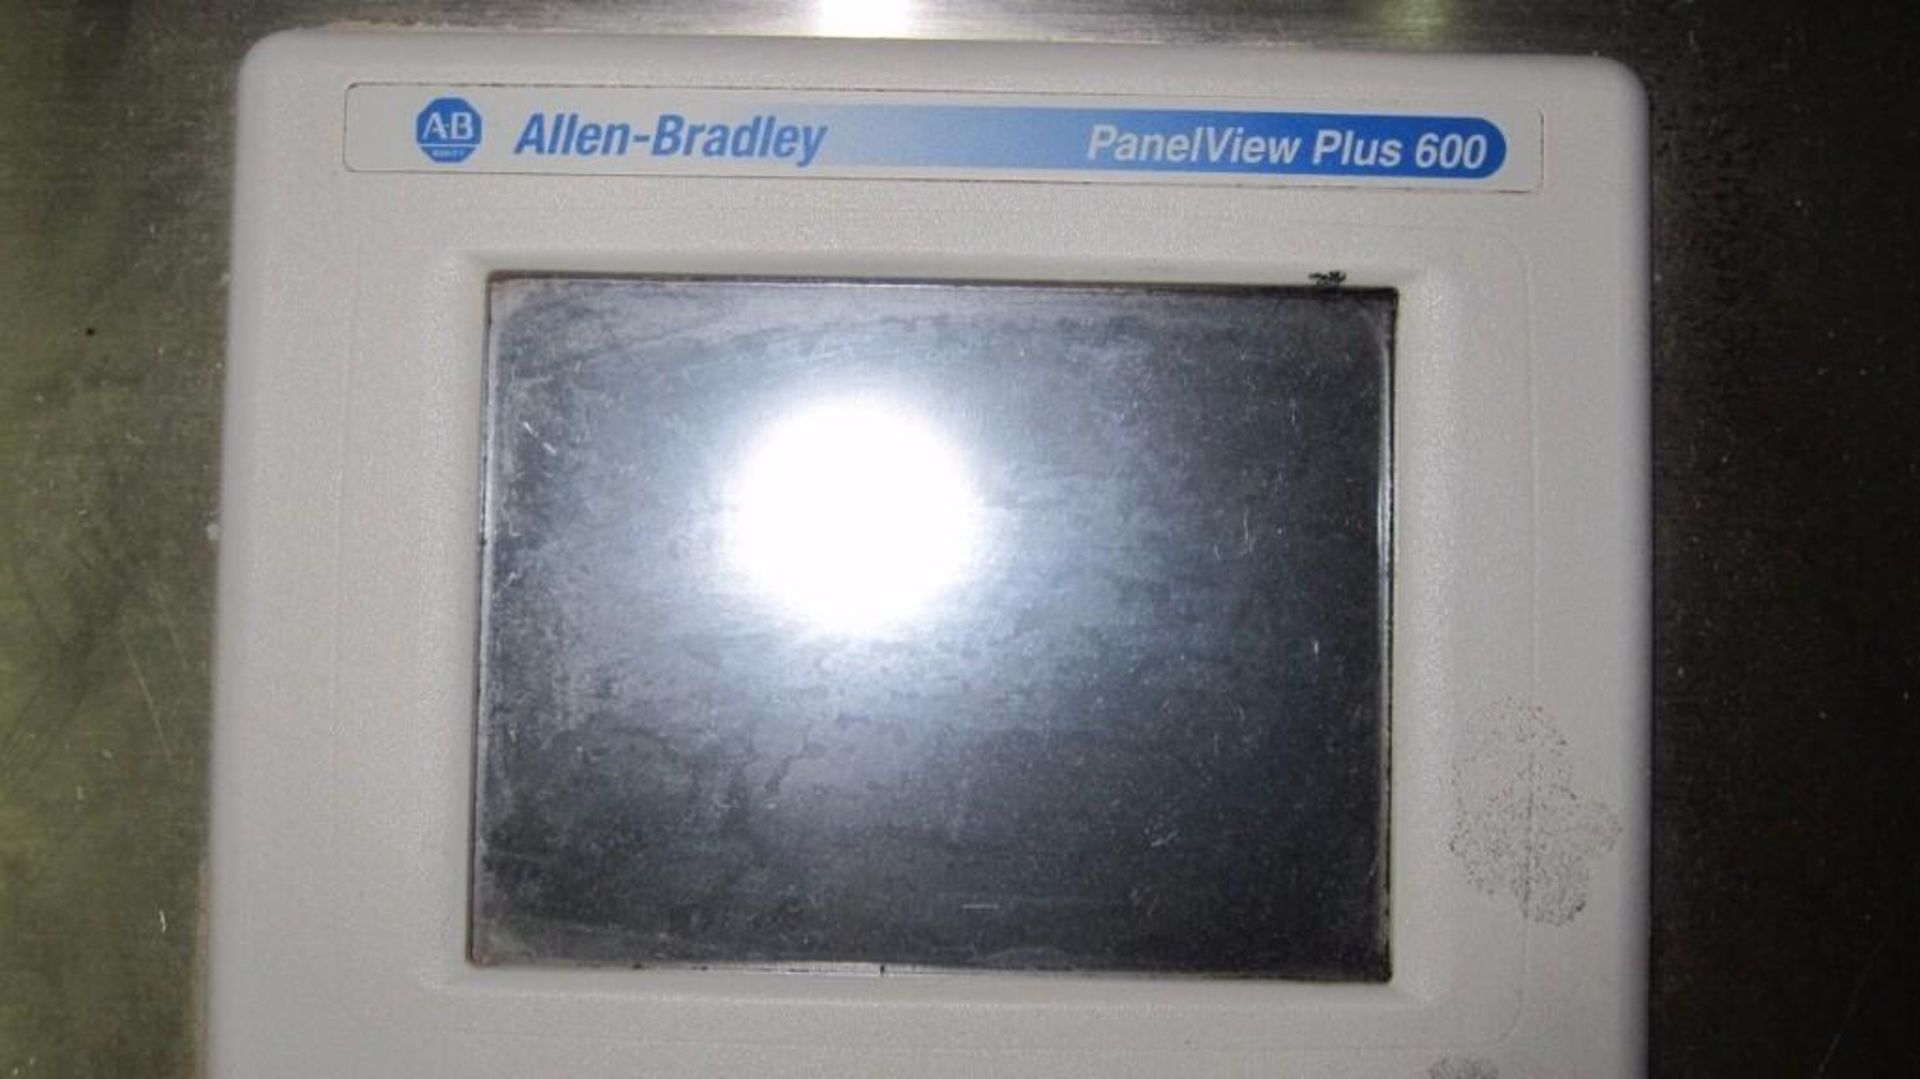 Allen-Bradley PanelView Plus 600 portable controller. - Image 4 of 4